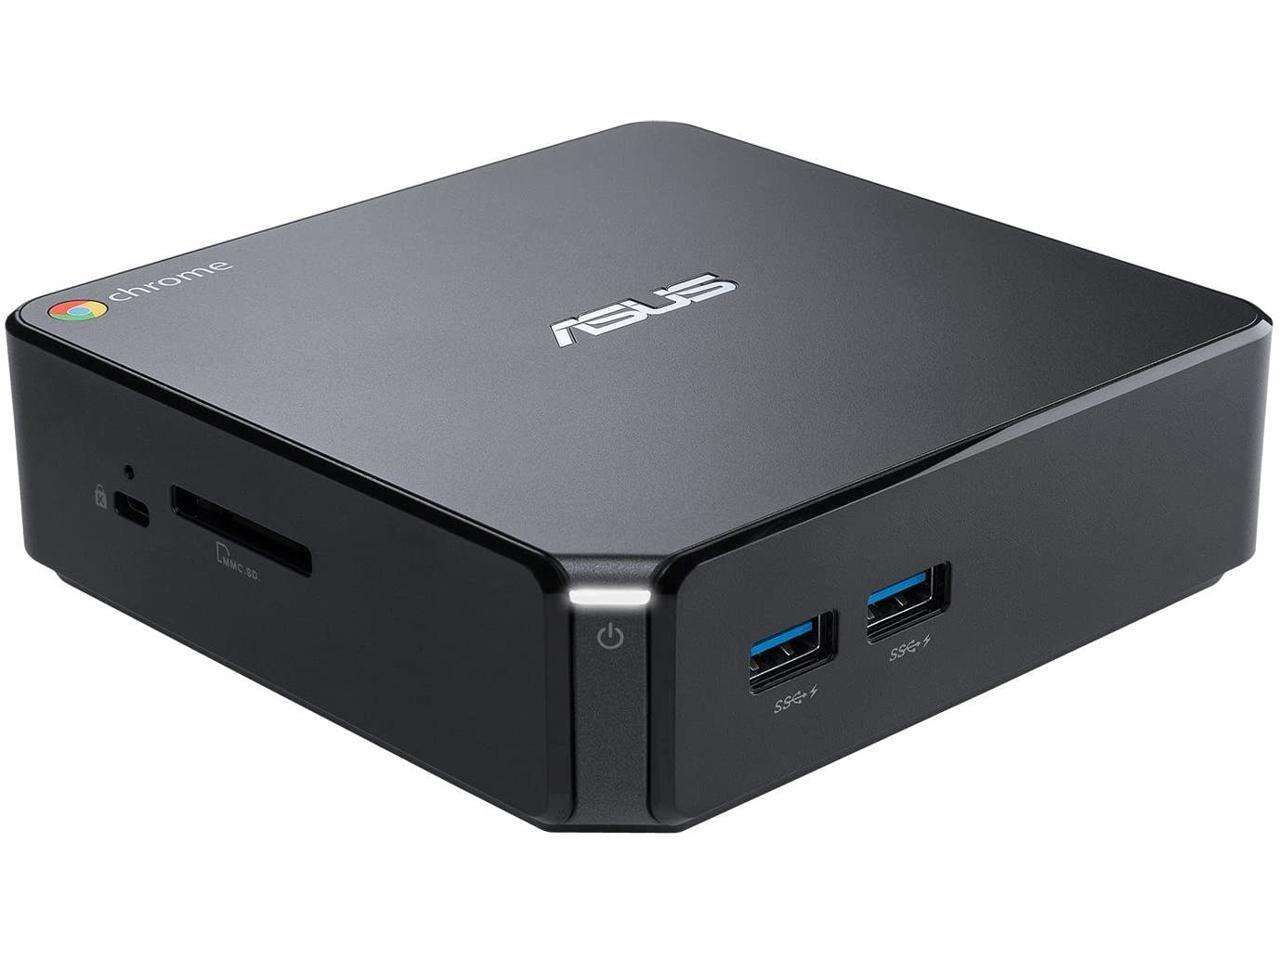 ASUS CHROMEBOX2-G015U i7-5500U 4 GB RAM 16GB SSD Chrome OS Mini PC Desktop